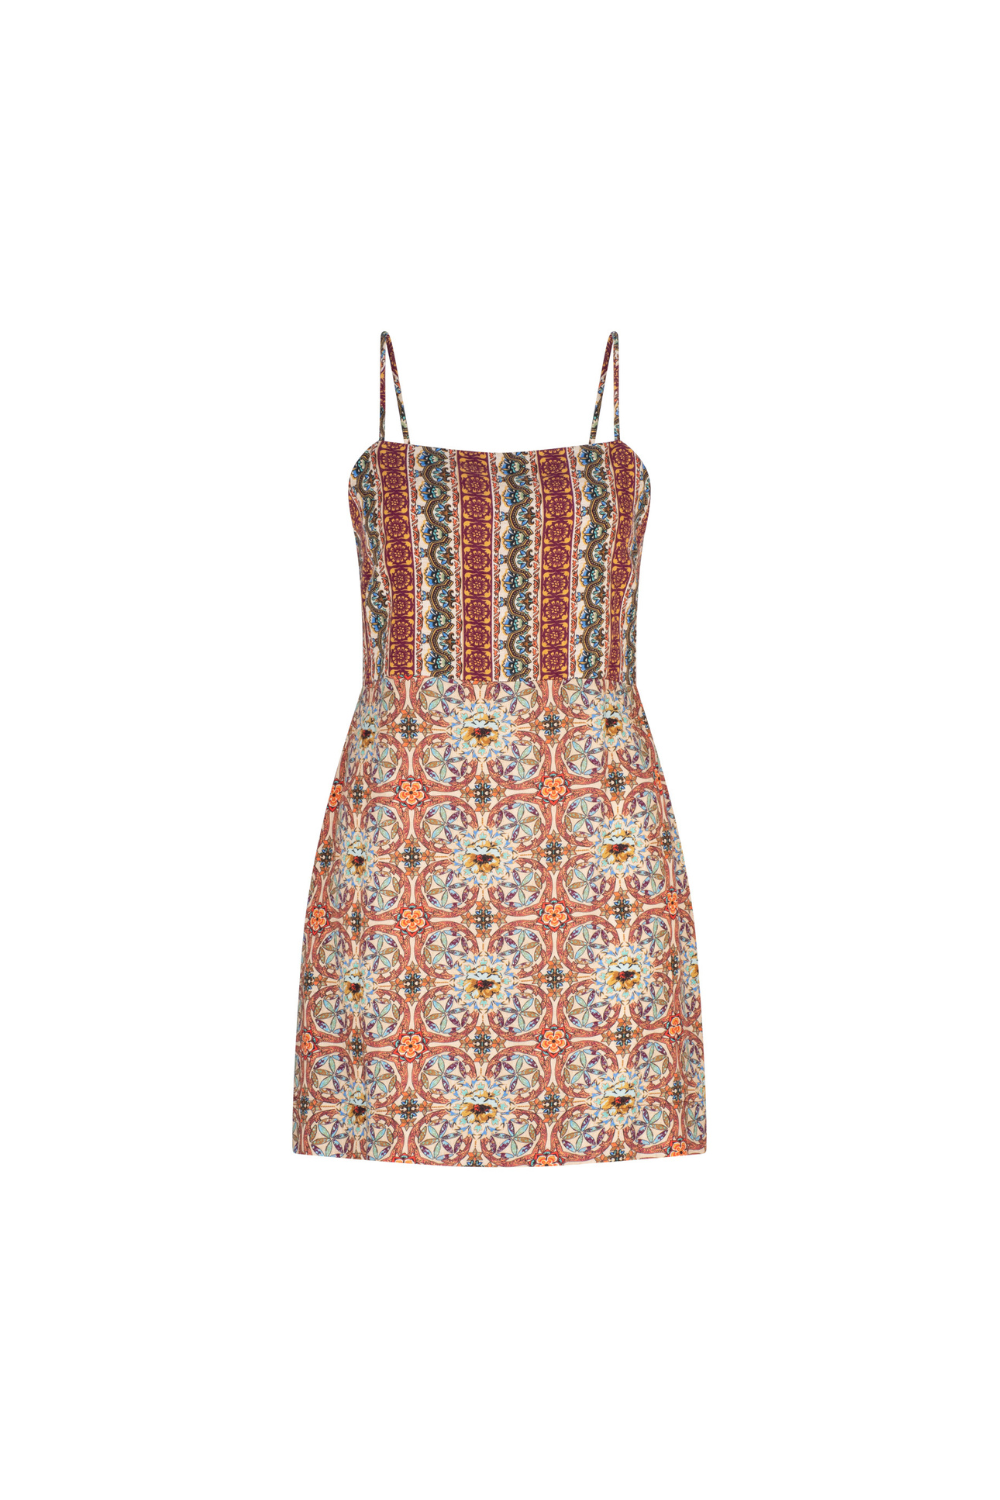 Monarch Selena Mini Dress - Coral Tile